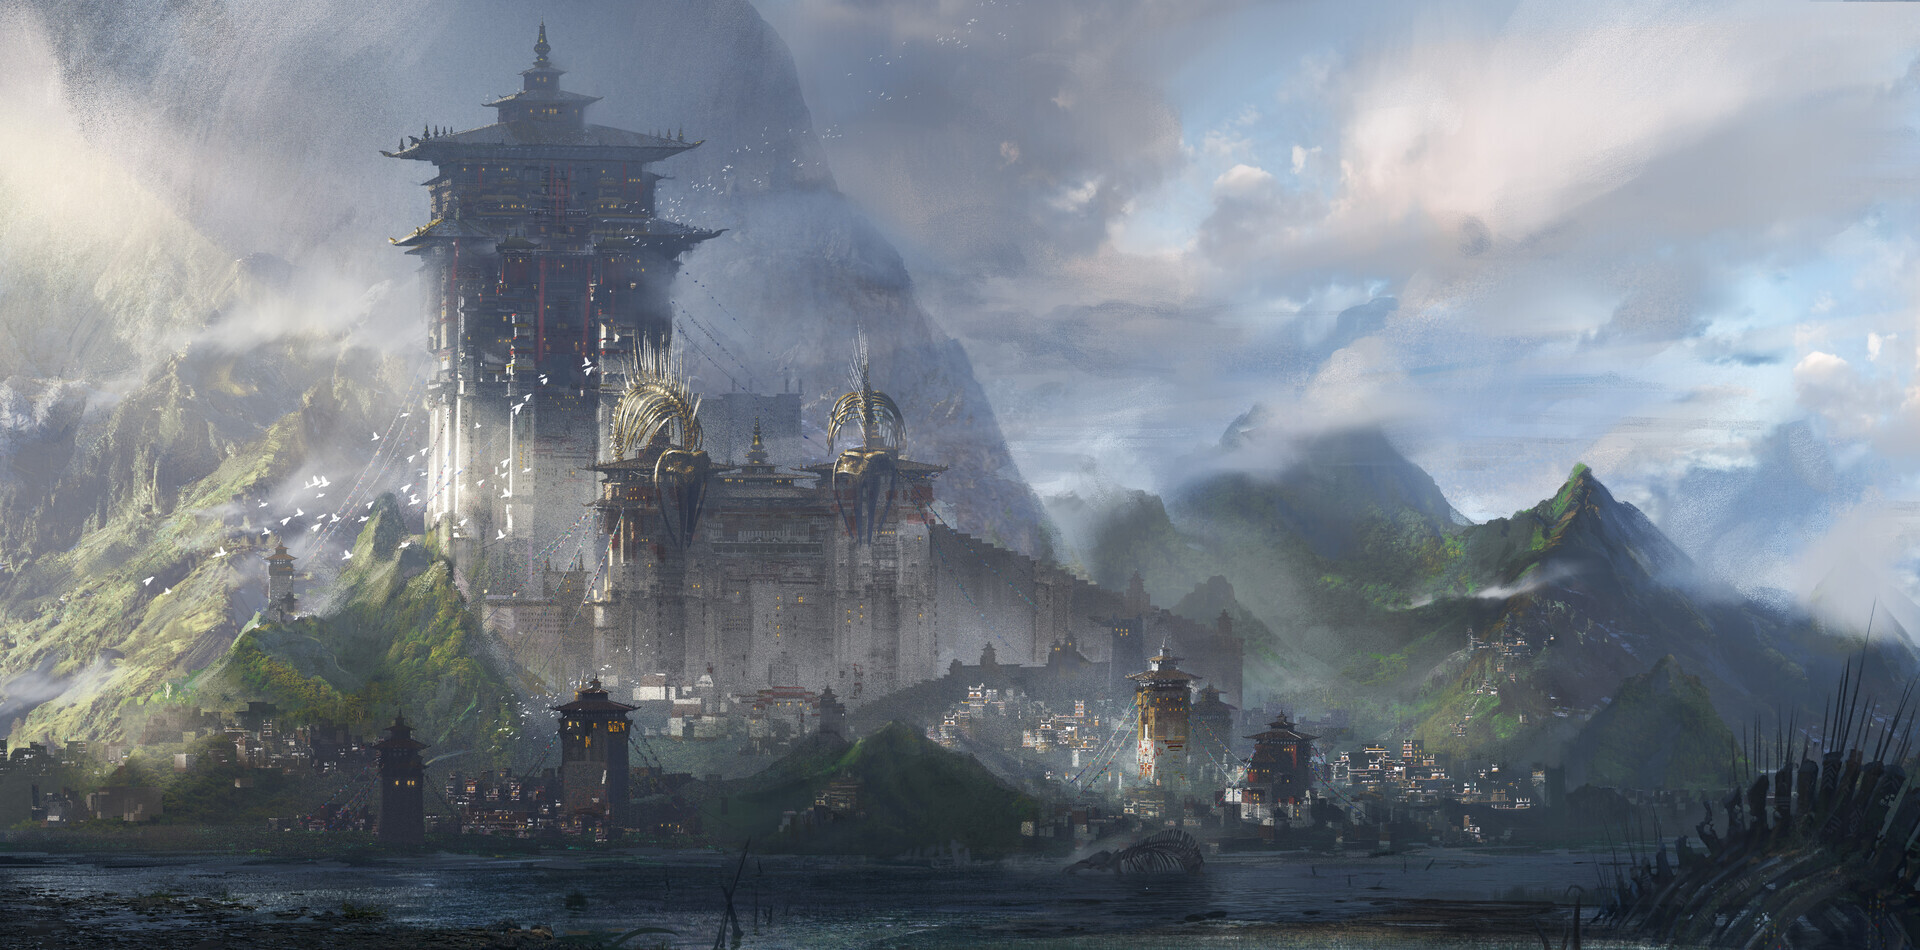 Lagoon of the old Bones – the Citadel